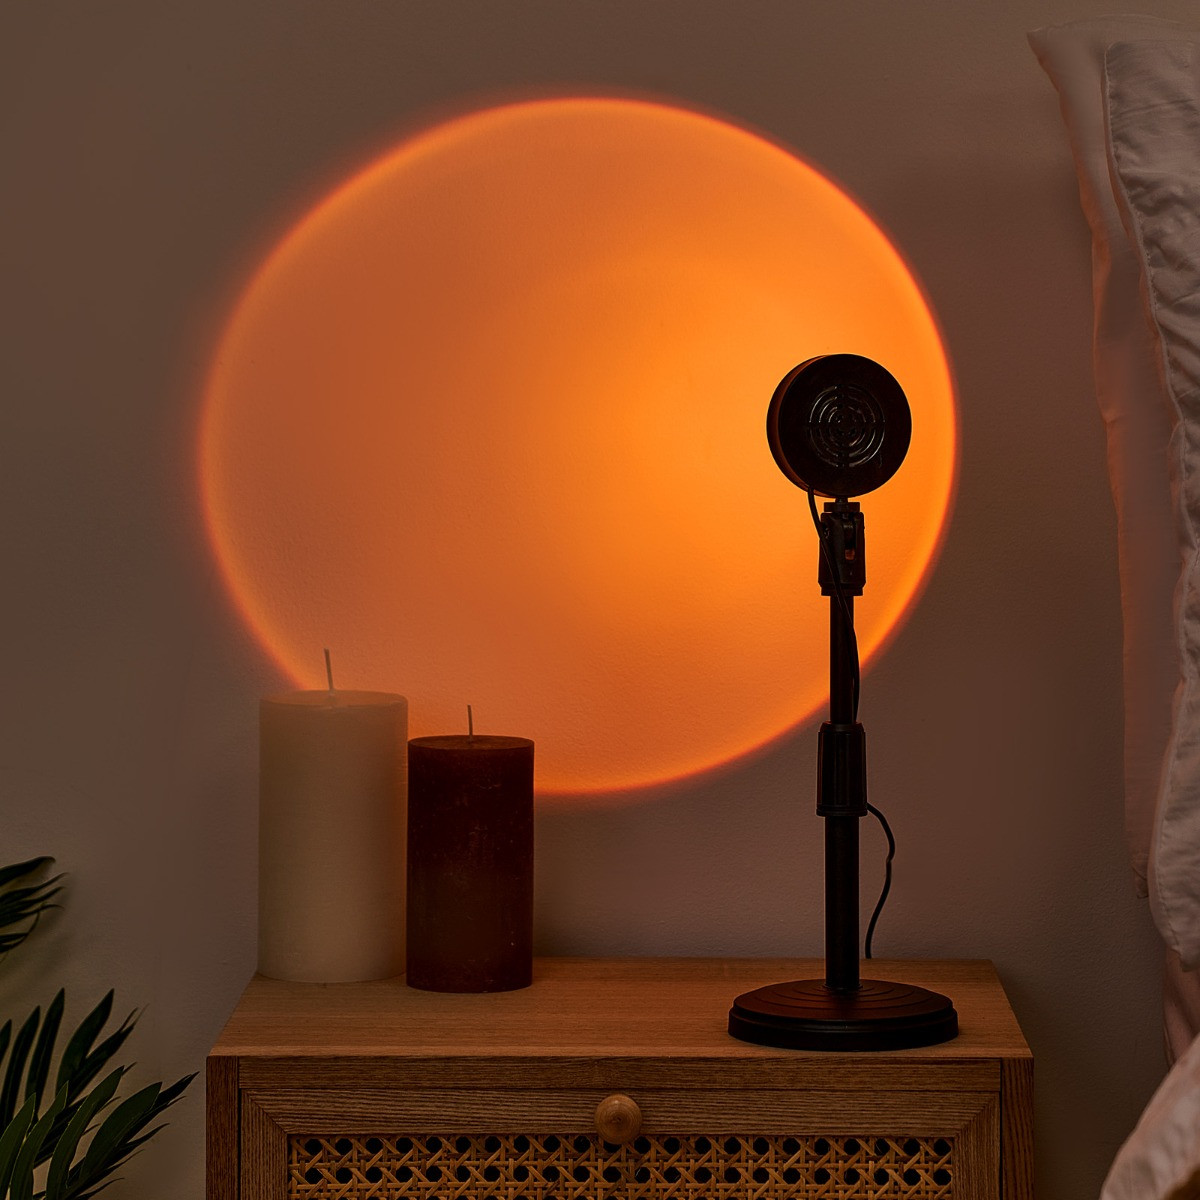 Sunset Mood Light Projection Lamp>